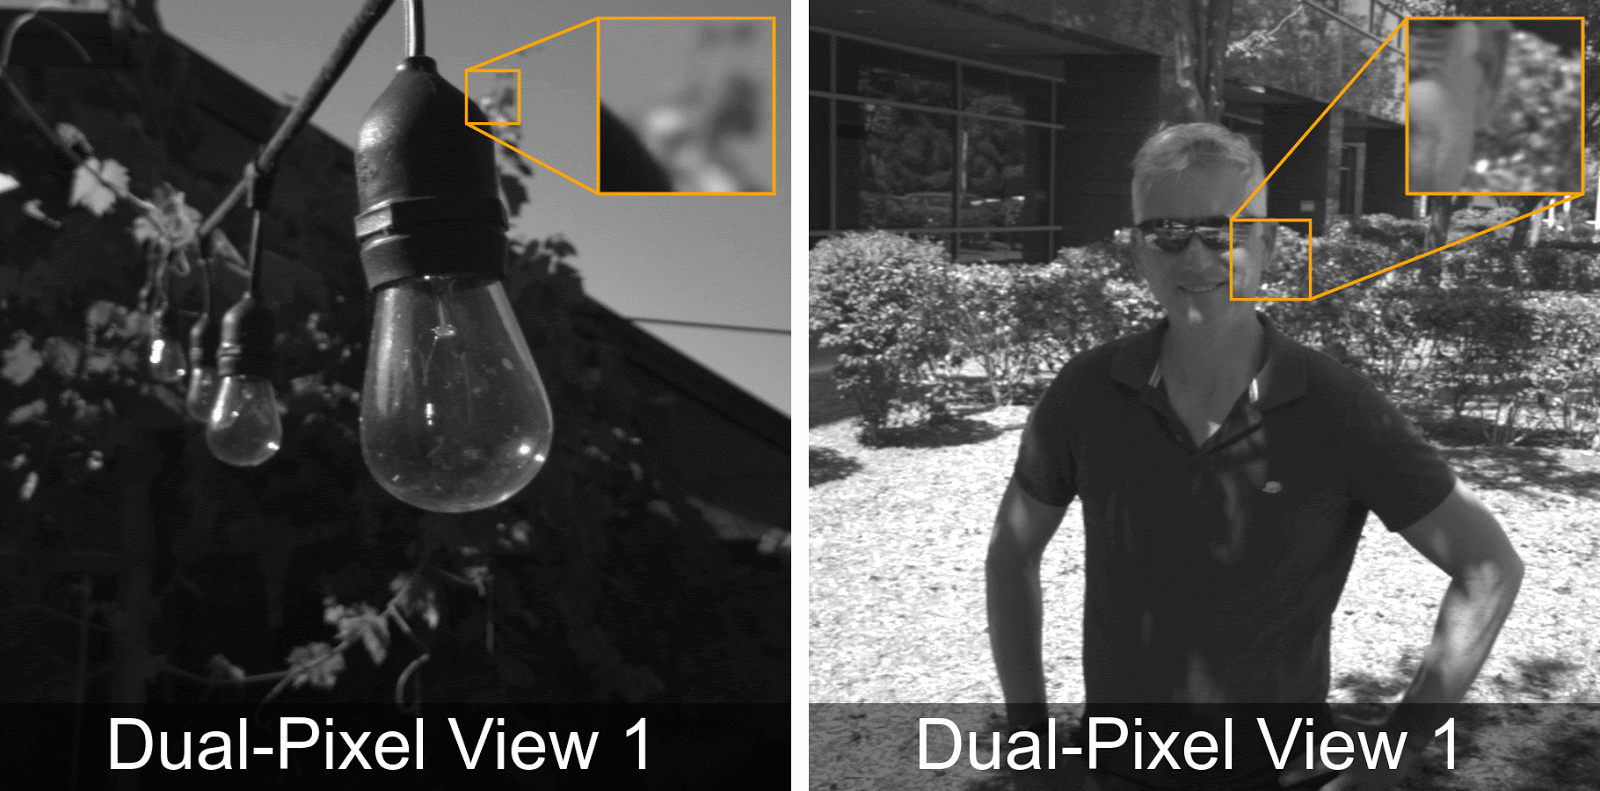 Google outlines how the Pixel 4’s dual cameras capture depth in portrait photos